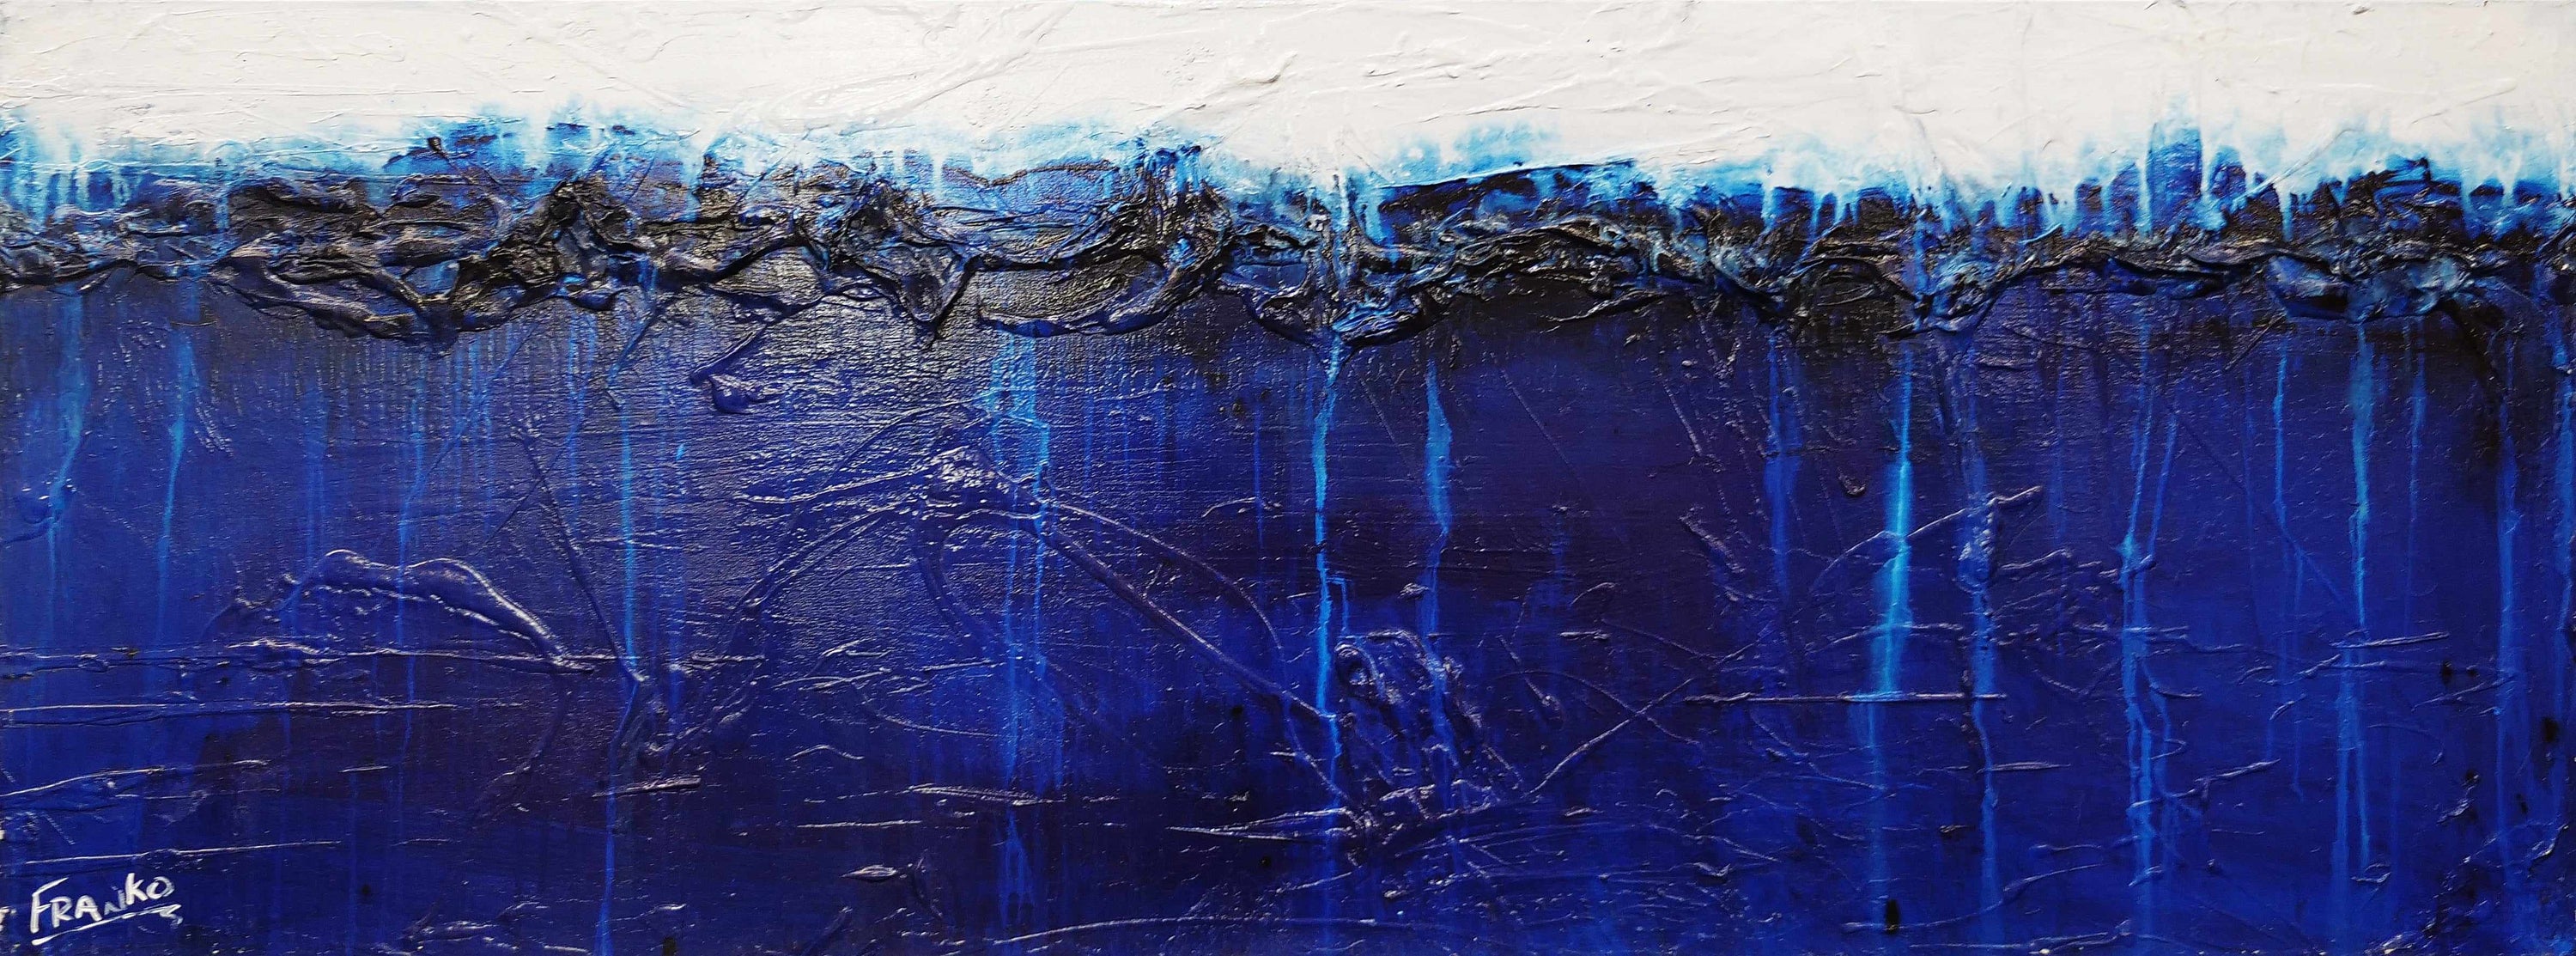 Raw Blue Jazz 160cm x 60cm Blue White Textured Abstract Painting-Abstract-Franko-[Franko]-[Australia_Art]-[Art_Lovers_Australia]-Franklin Art Studio